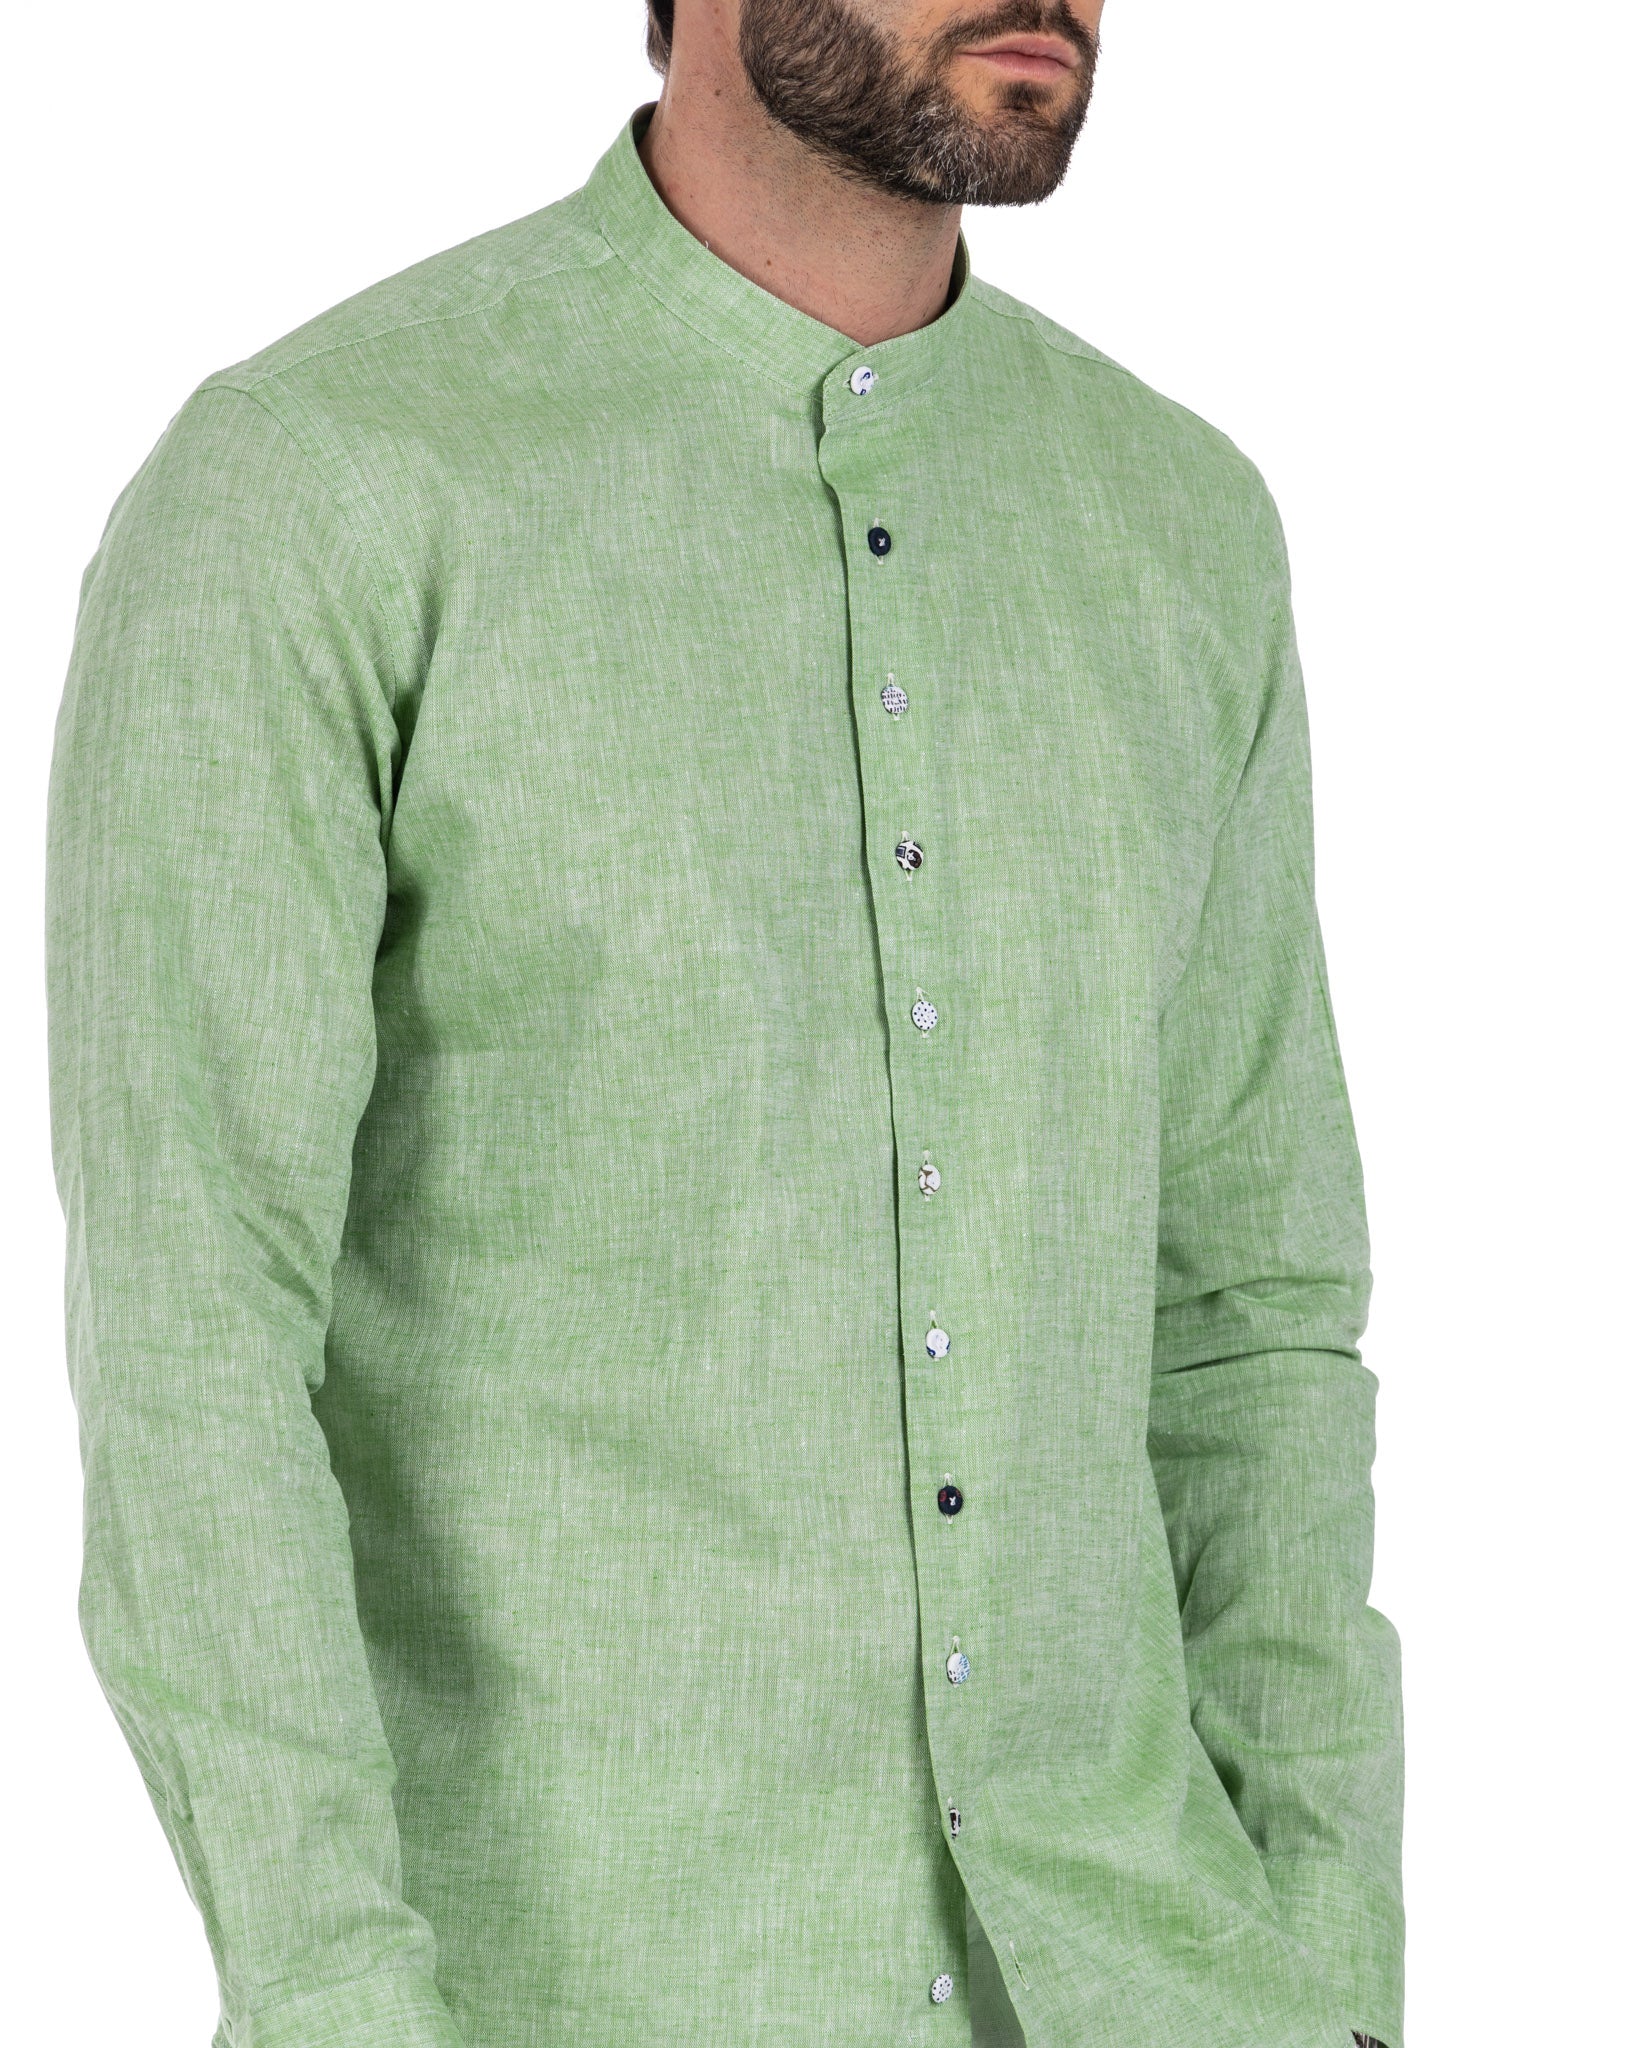 Positano - chemise coréenne en lin vert